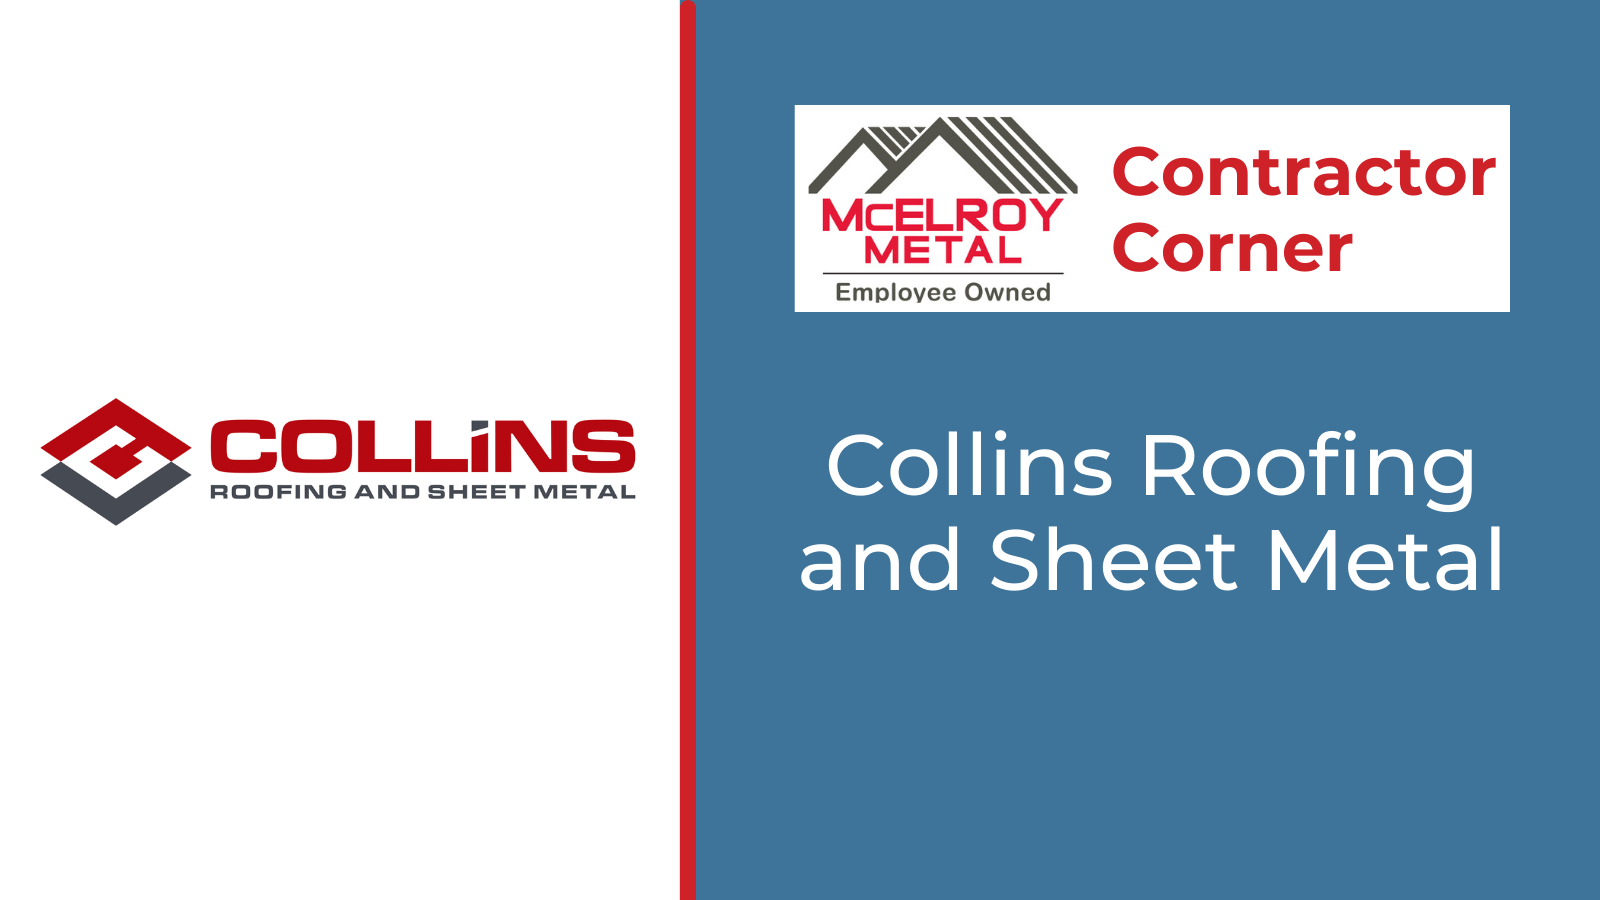 Contractor Corner - Collins Roofing and Sheet Metal